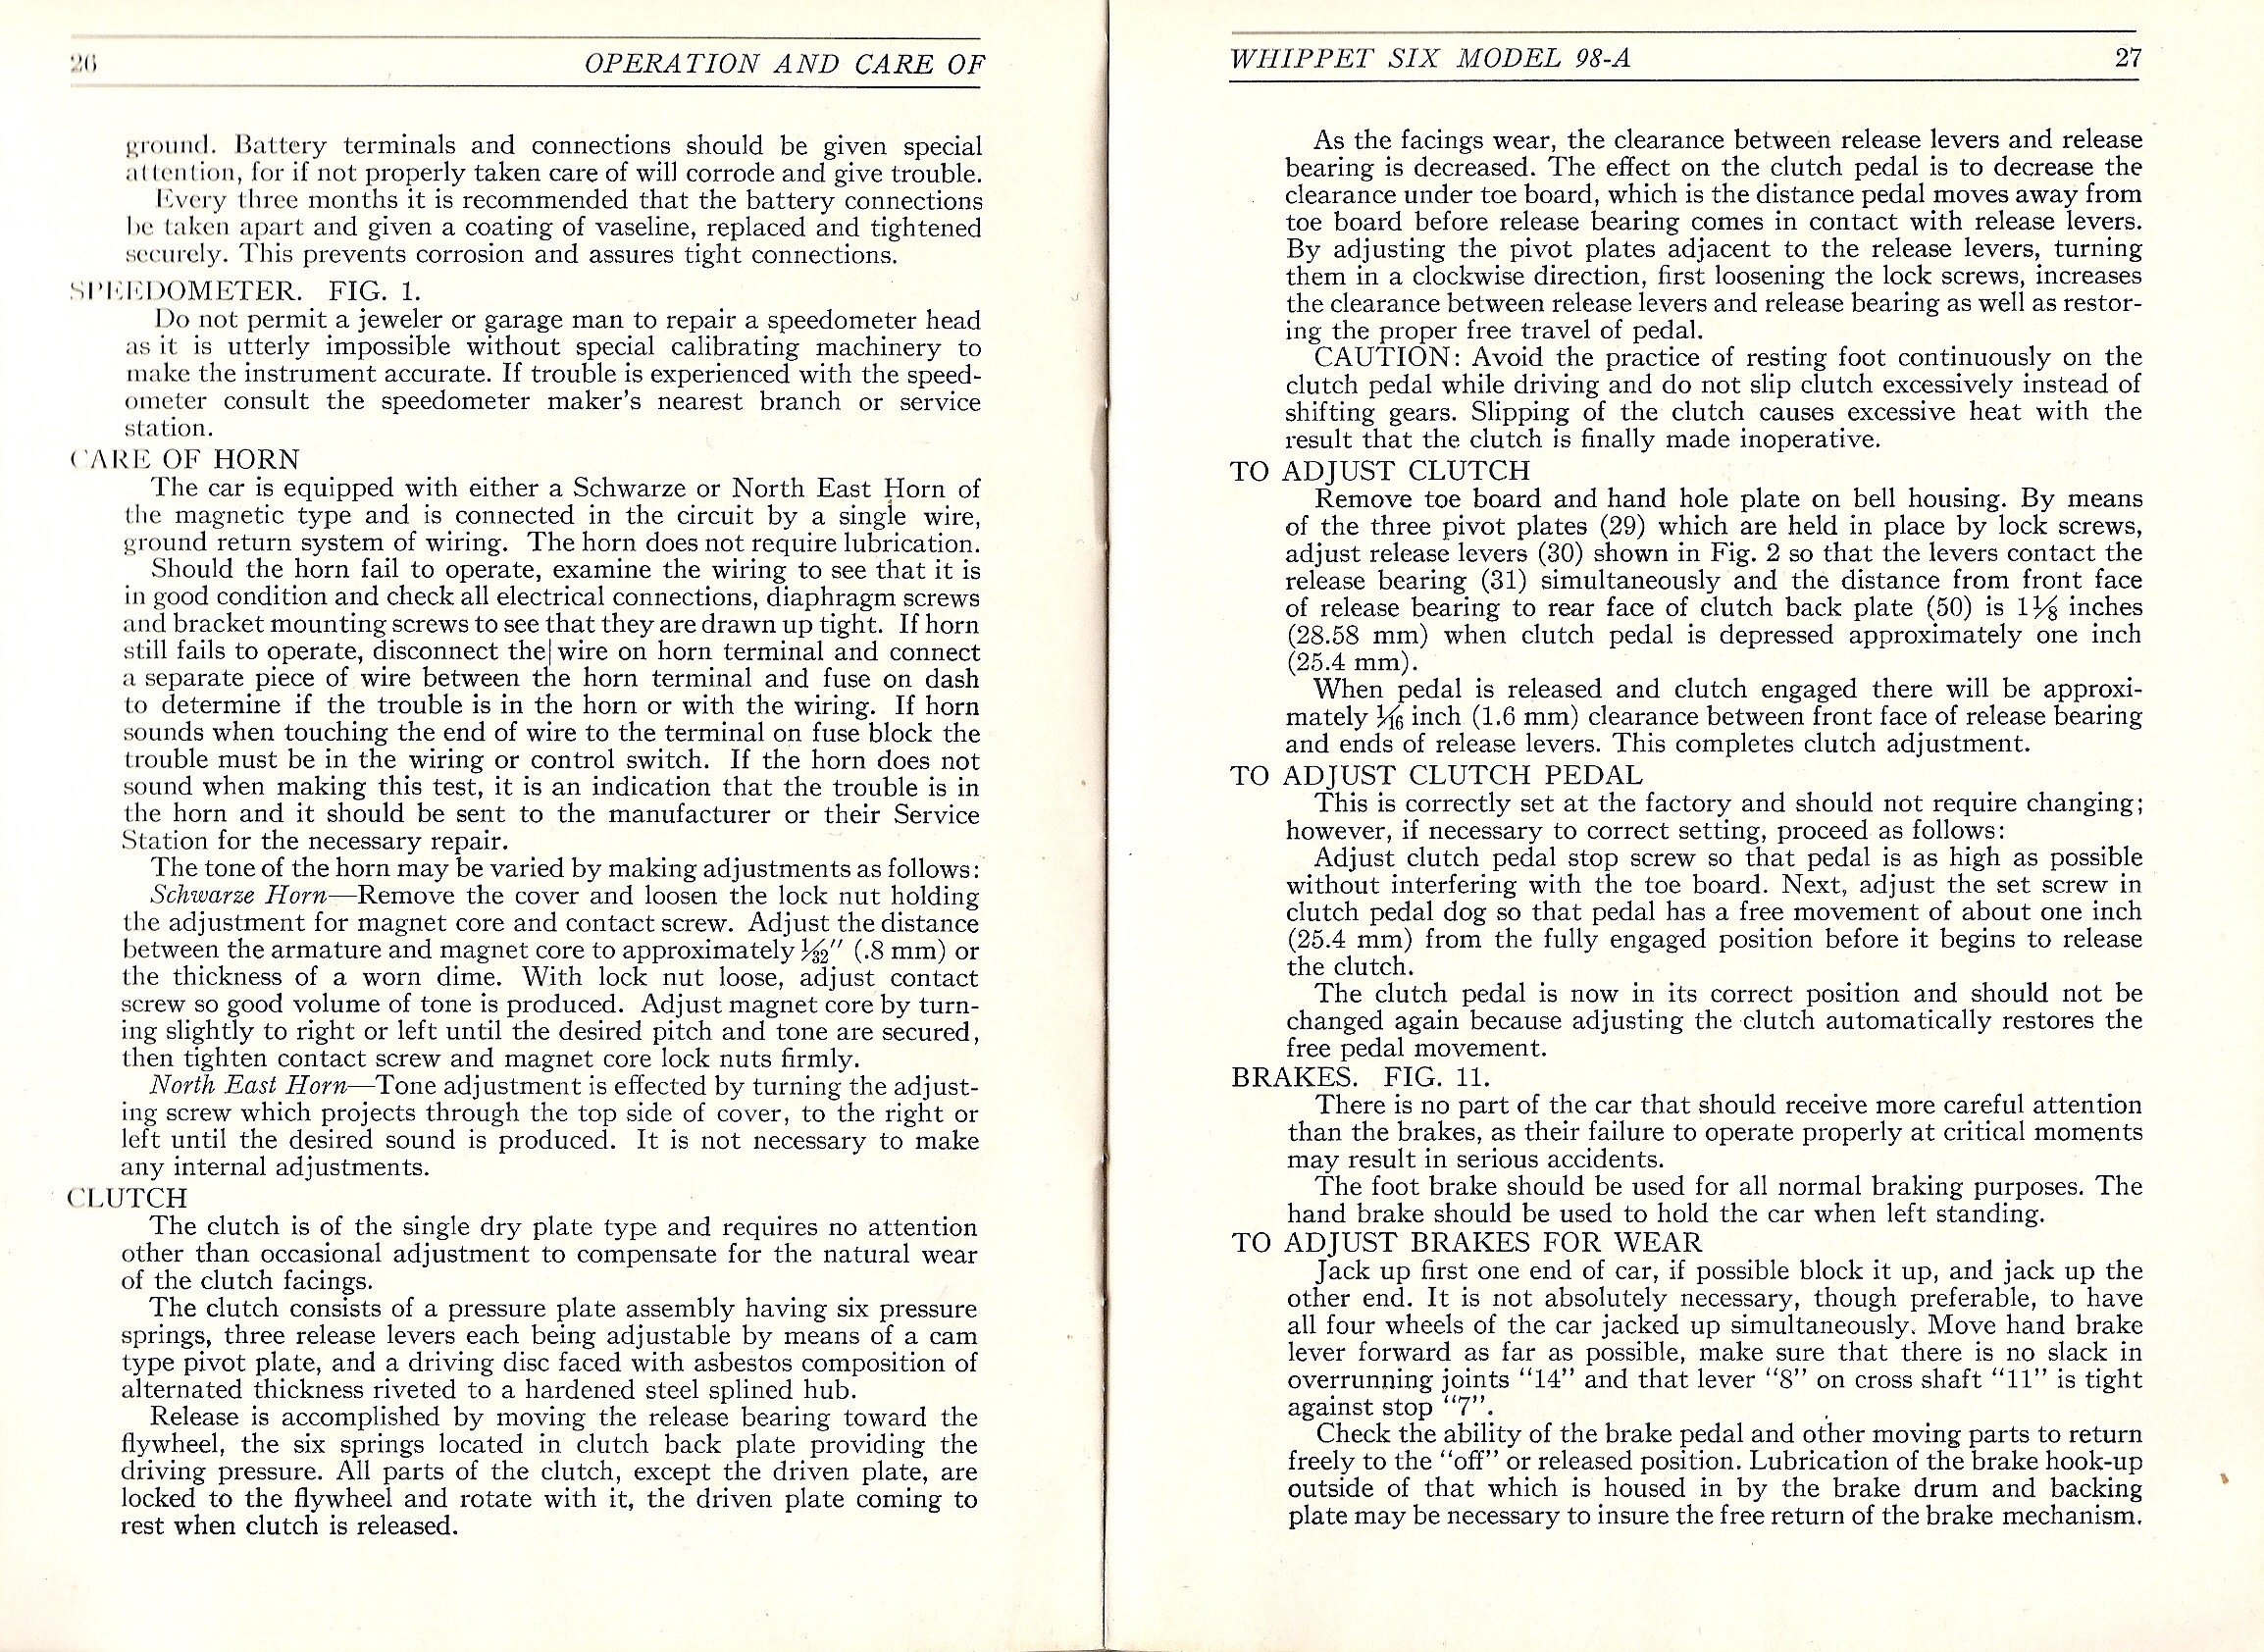 1929_Whippet_Six_Operation_Manual-26-27